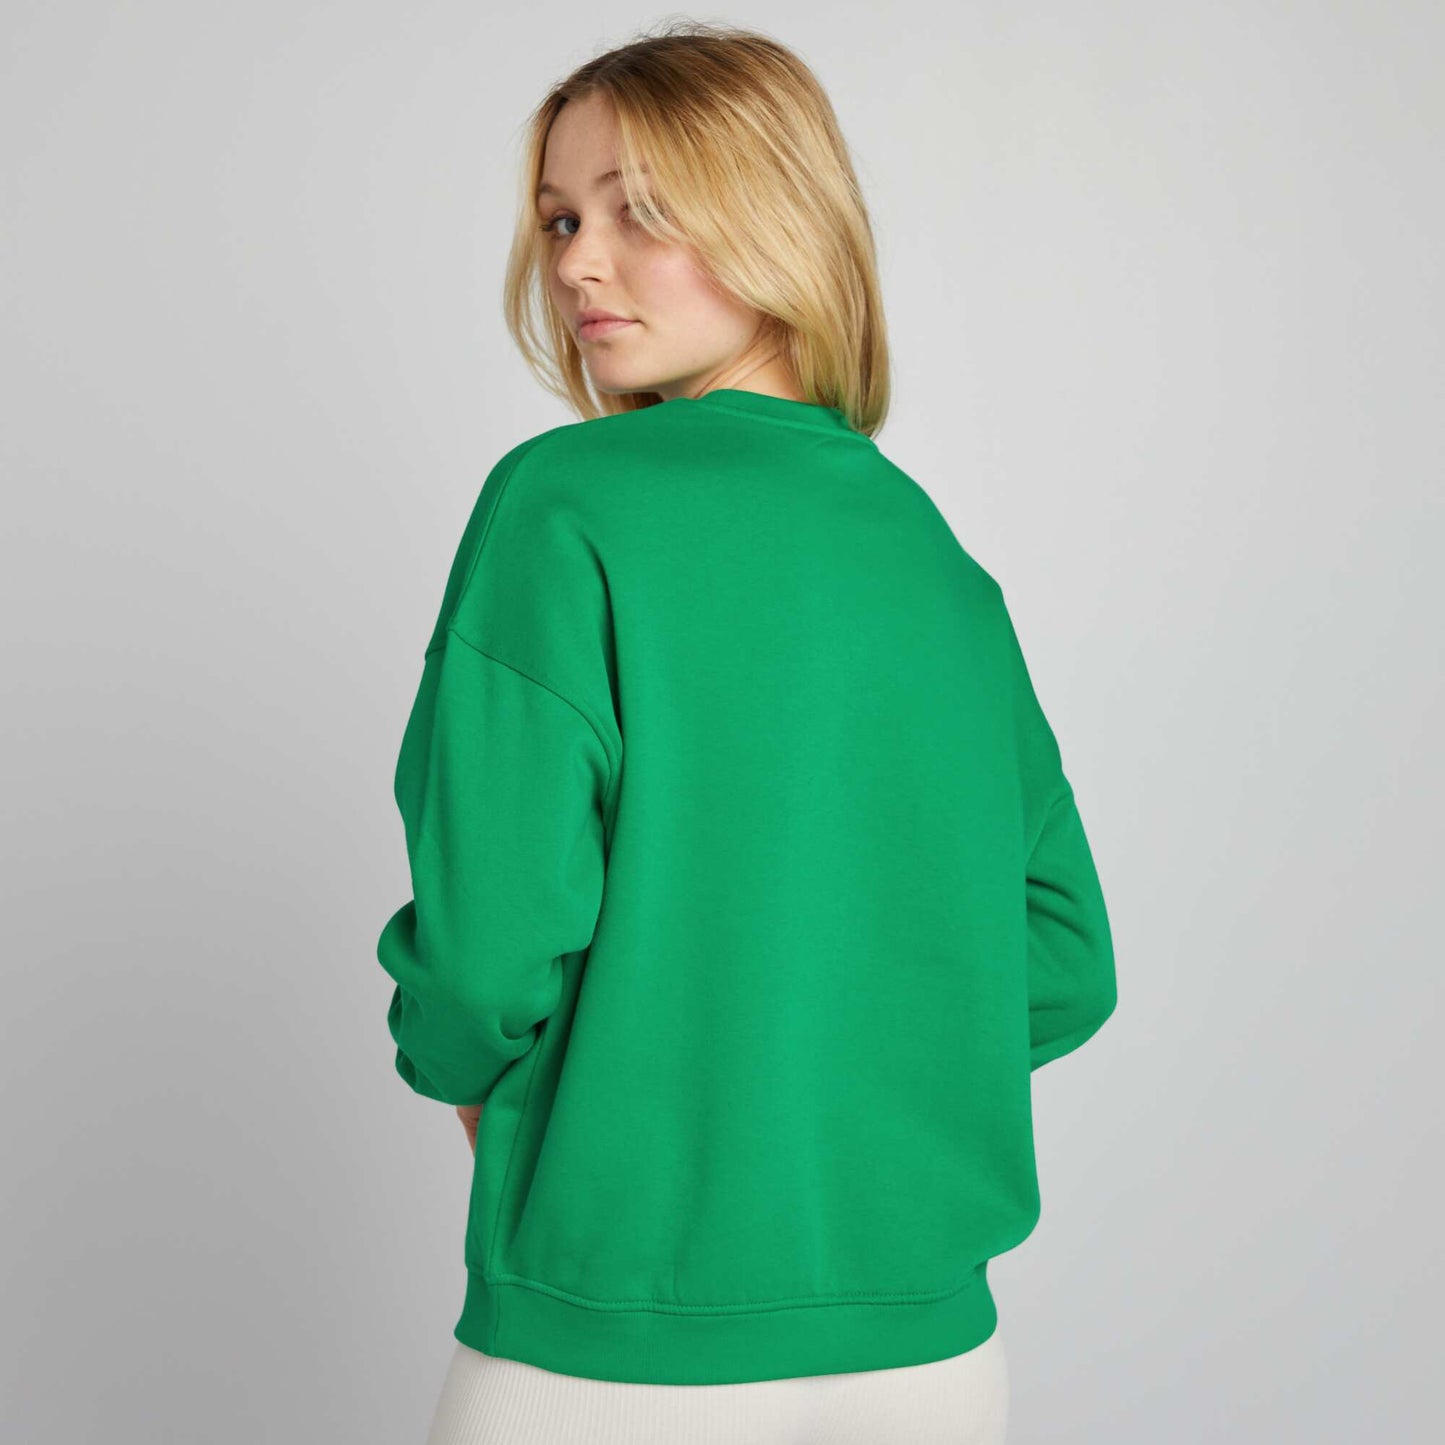 Plain sweatshirt fabric sweater garden green